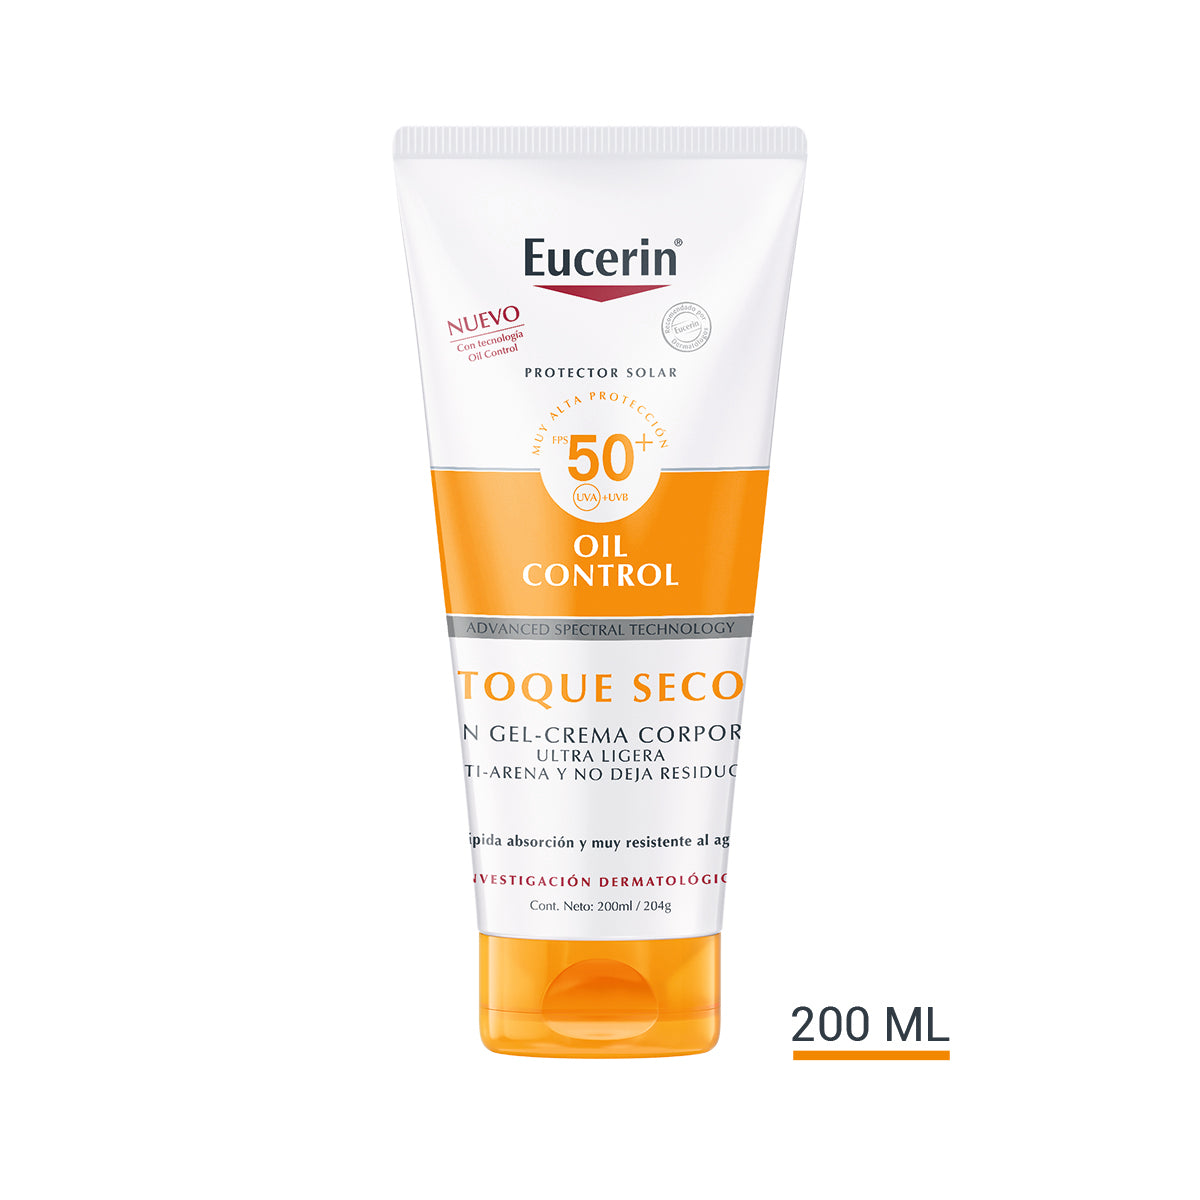 Eucerin protector solar corporal gel cremal oil control FPS50 200ml.